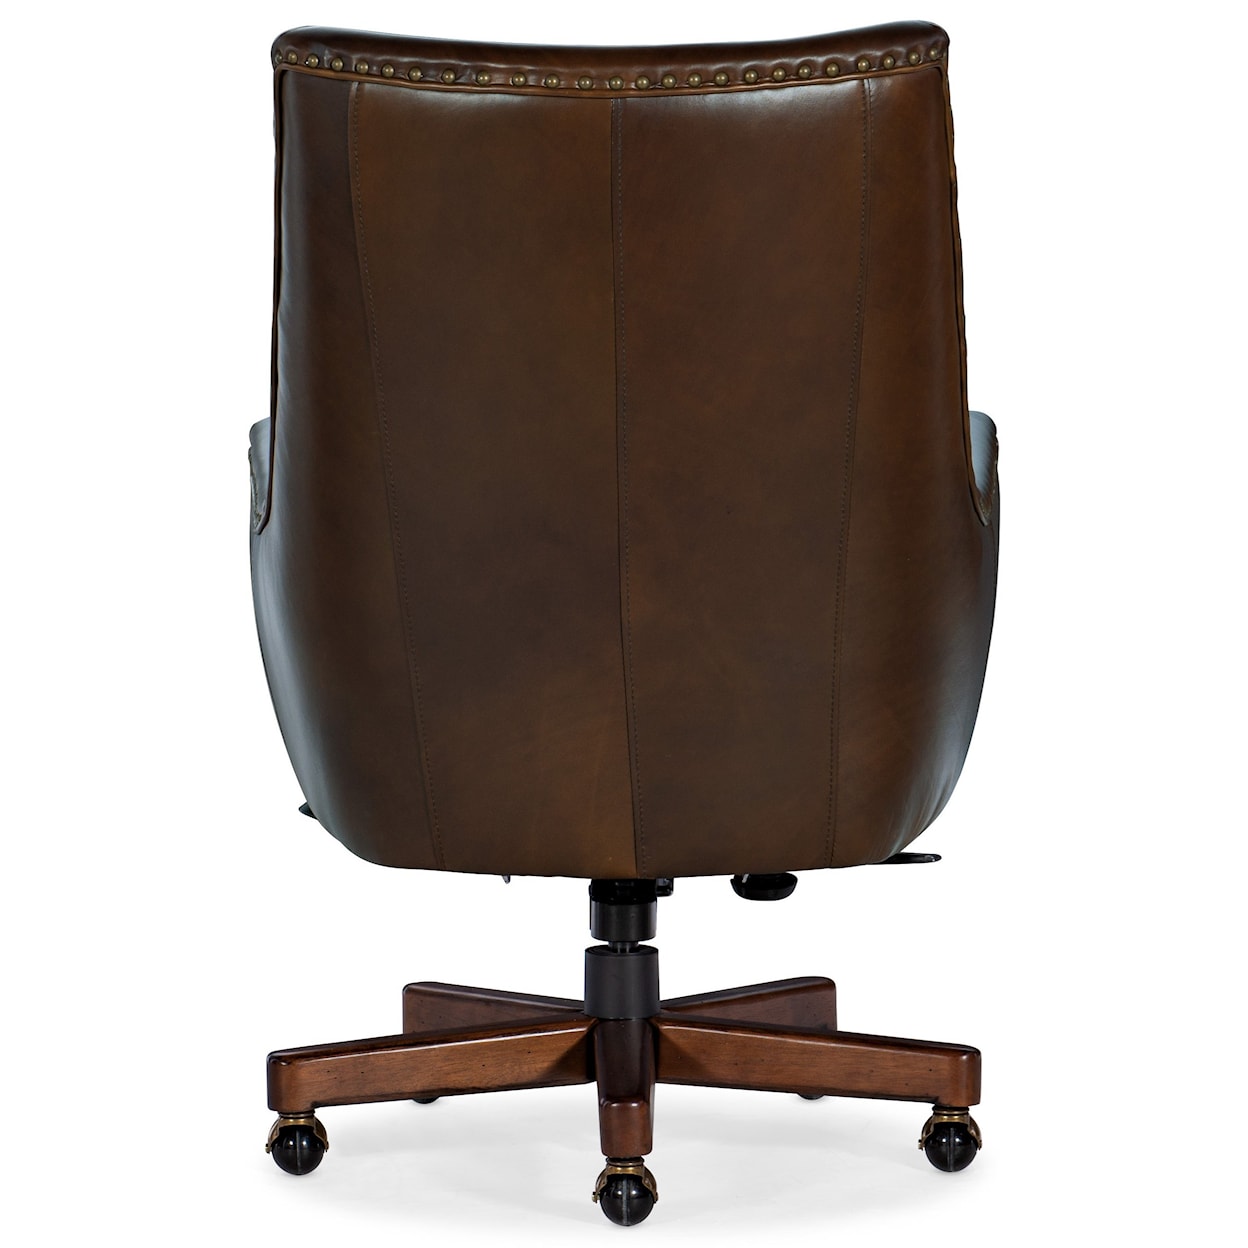 Hooker Furniture Executive Seating Kent Executive Swivel Tilt Chair